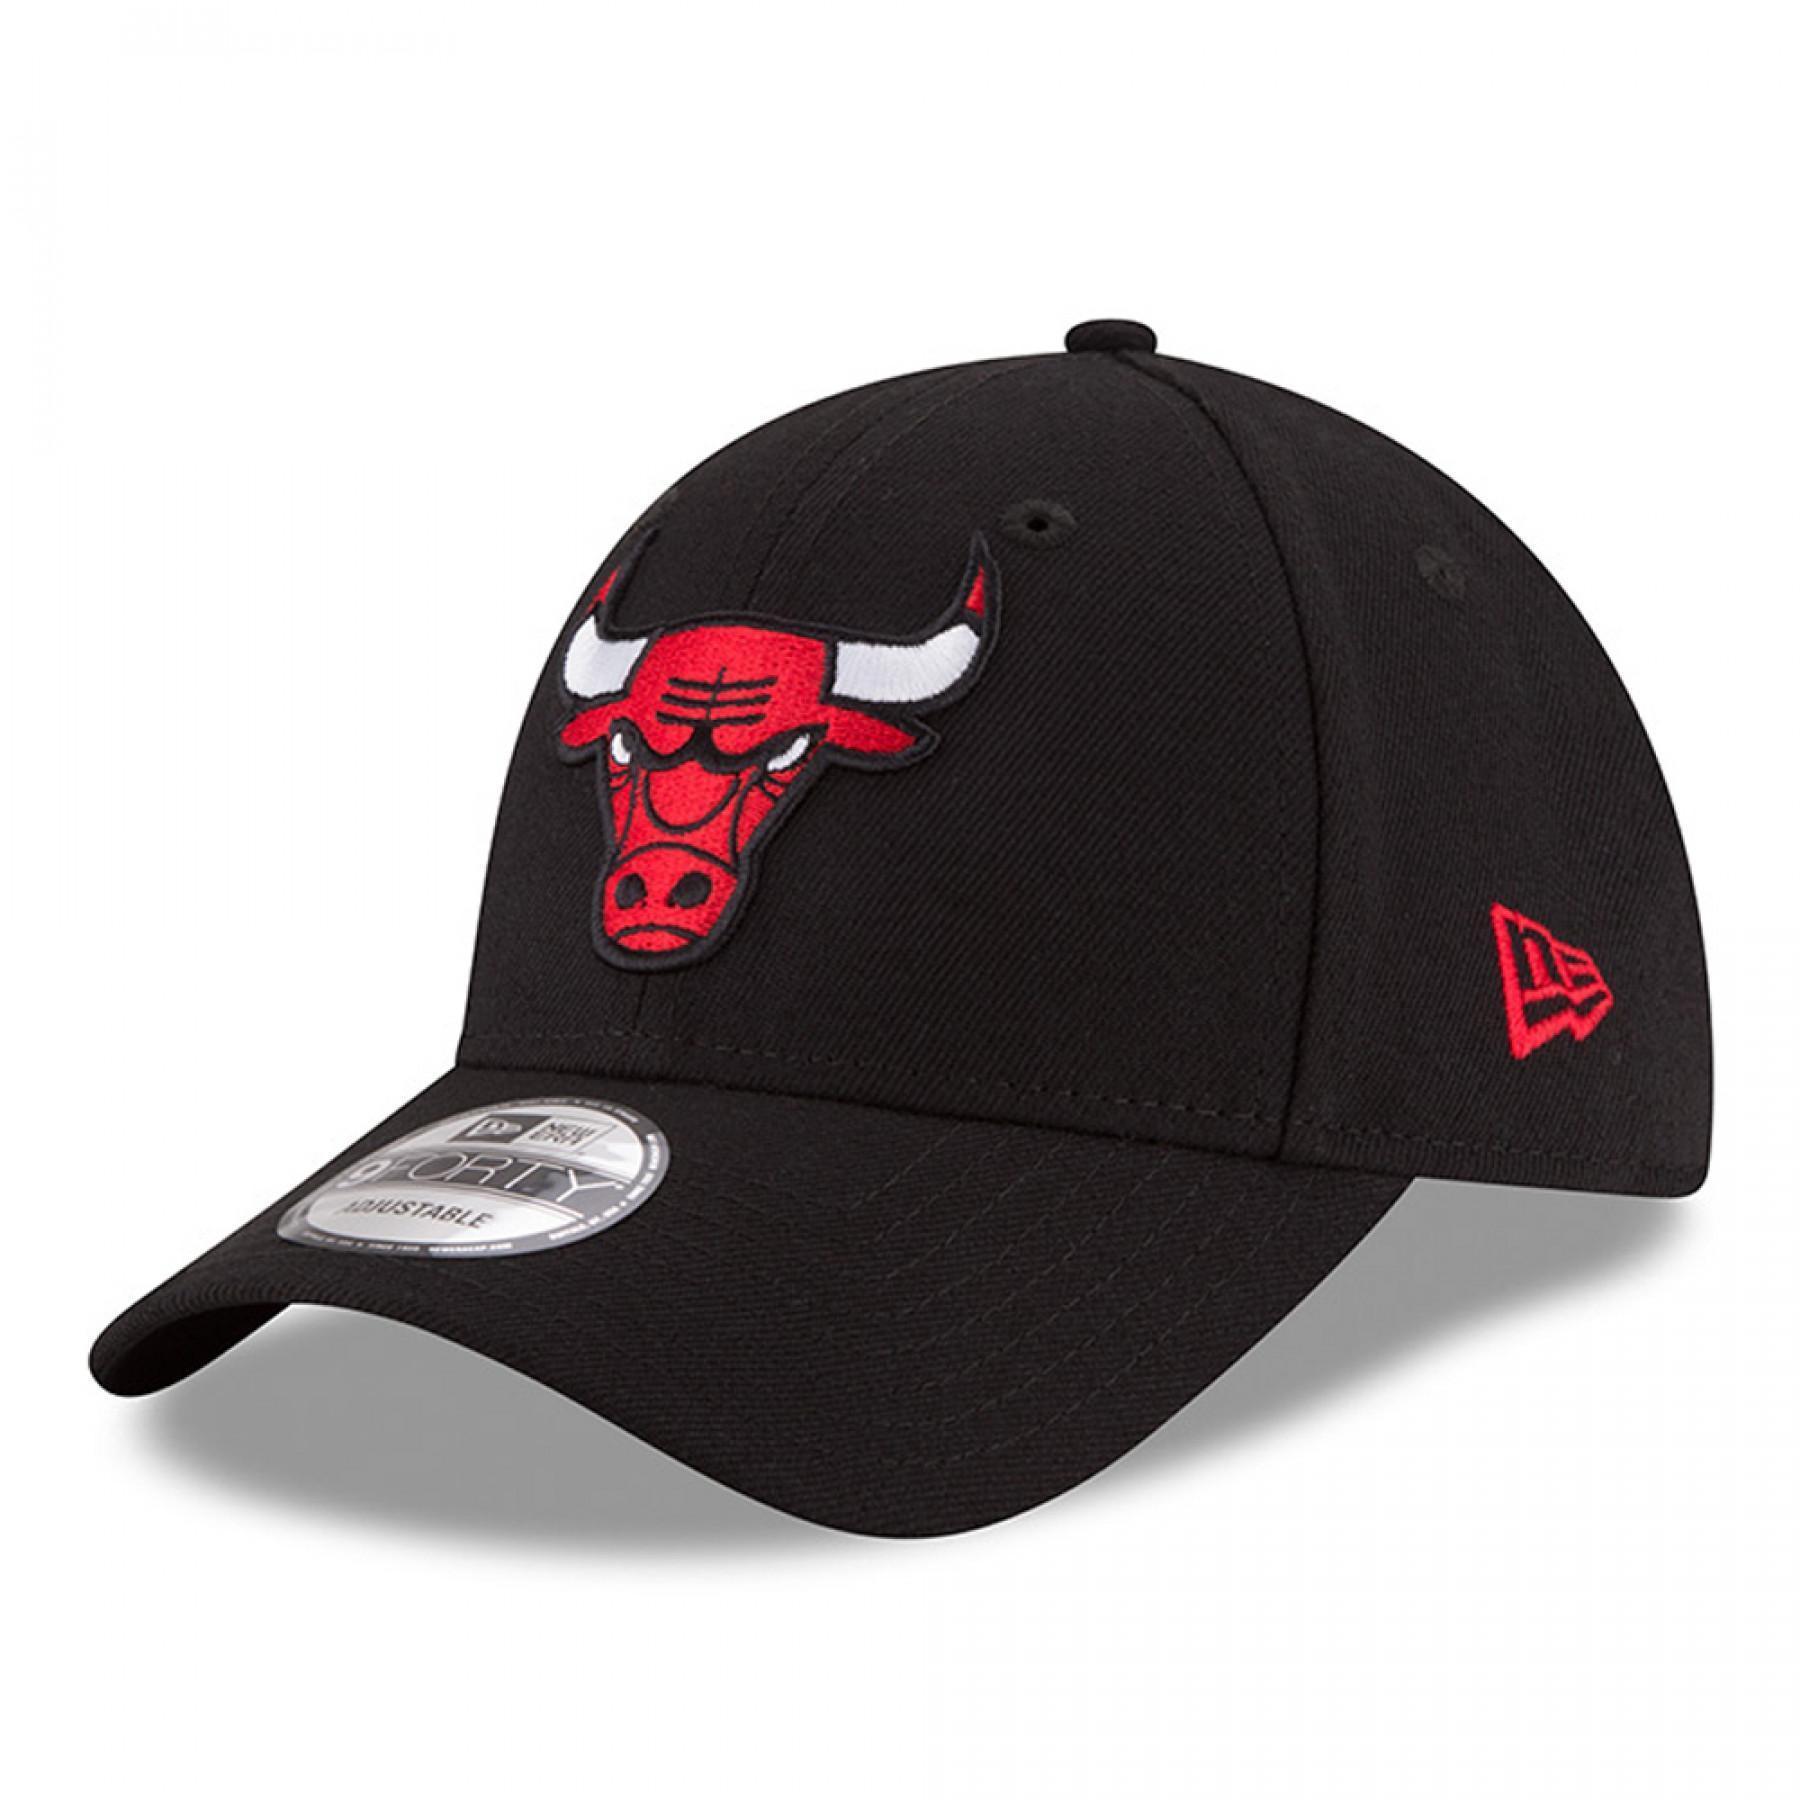 The League 9forty Chicago Bulls New Era cap